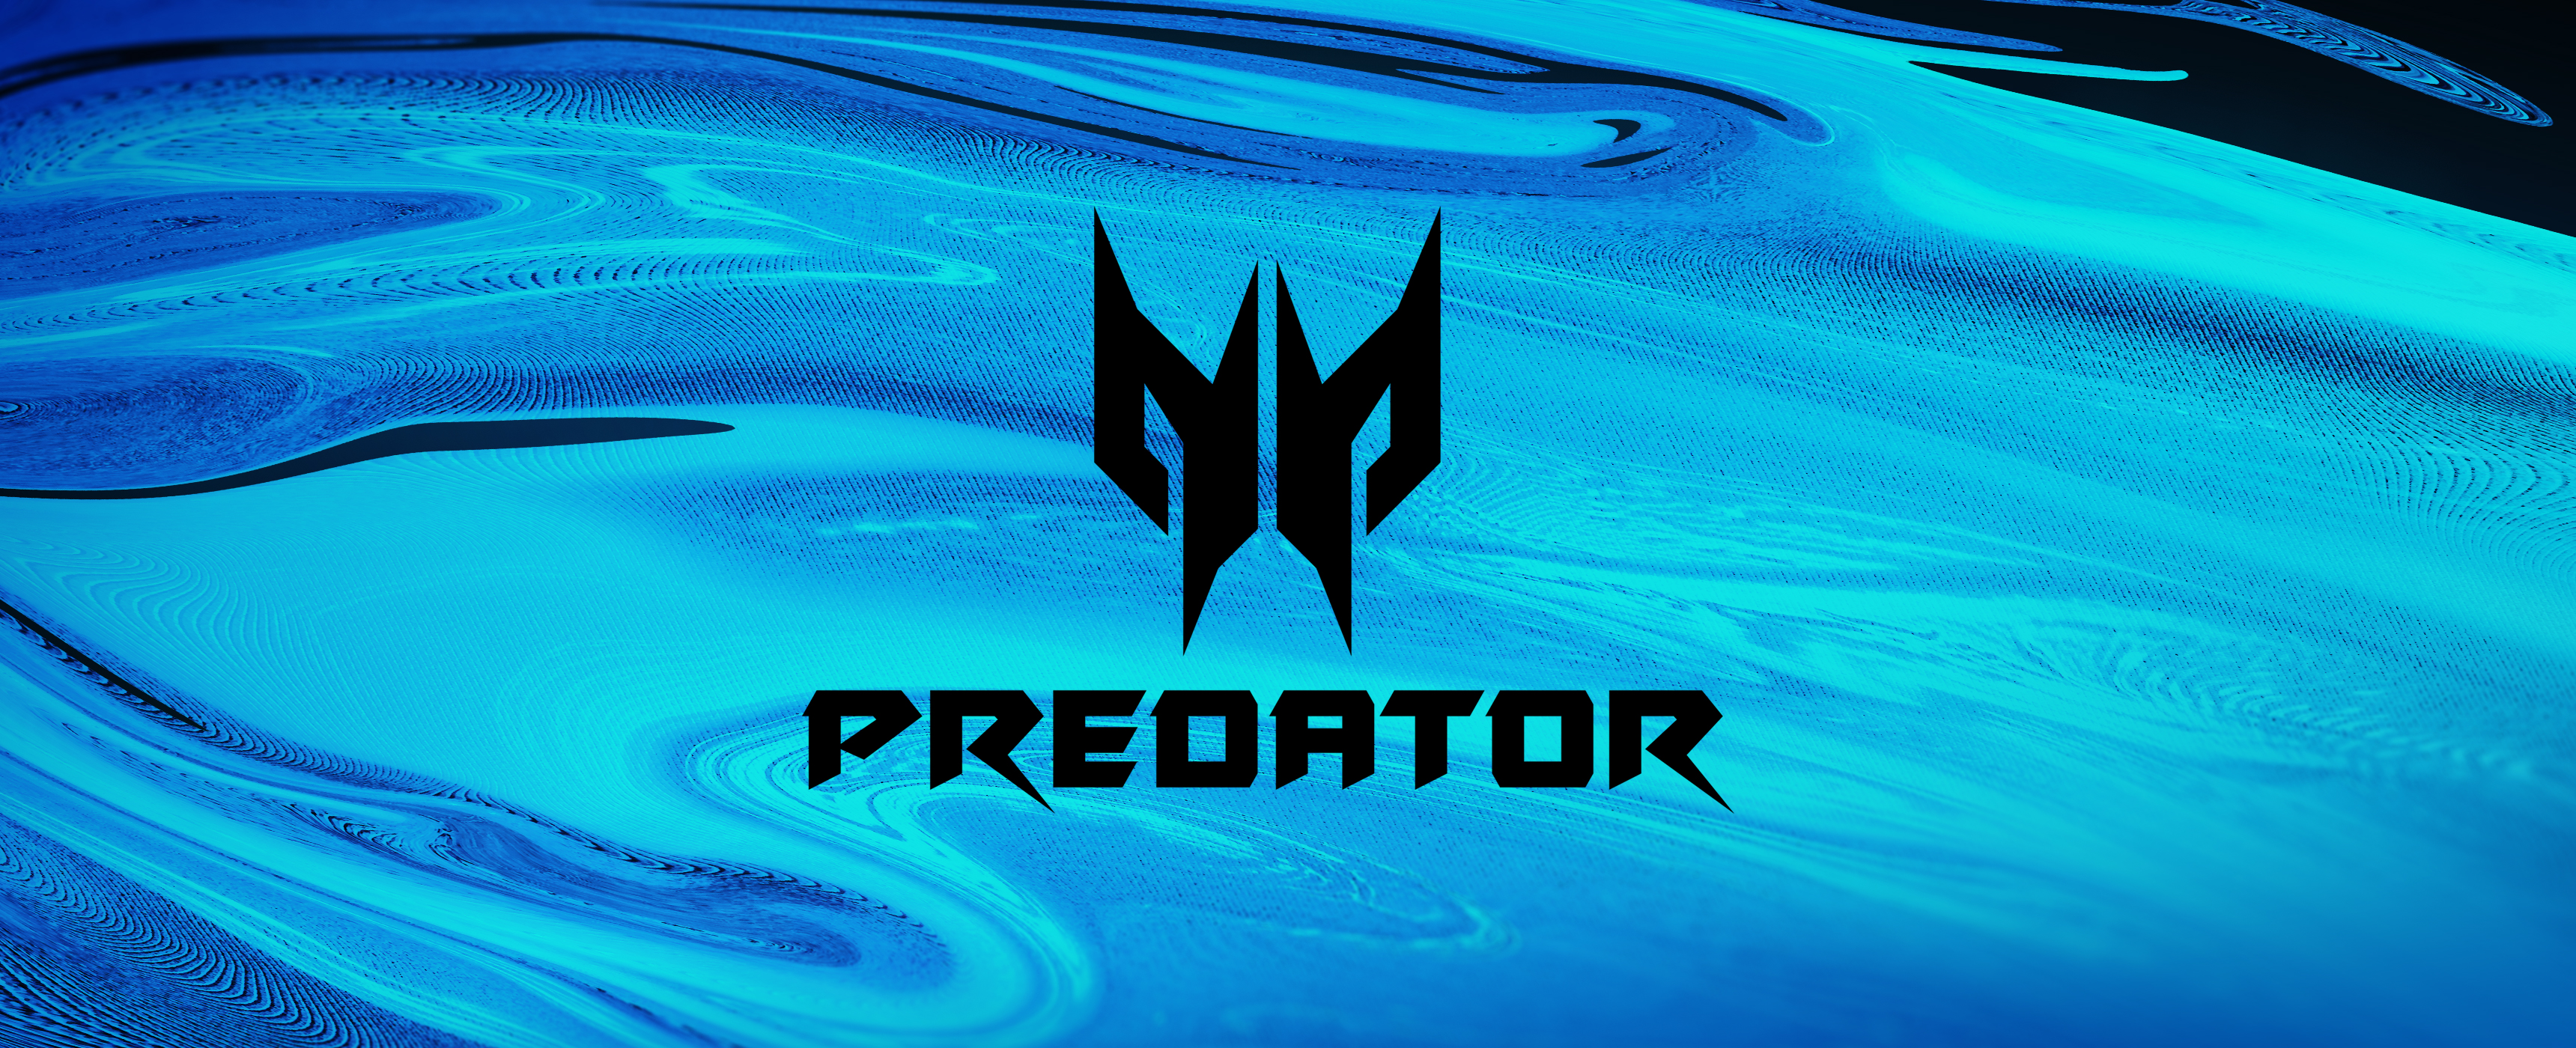 Wallpaper Predator Acer - KibrisPDR